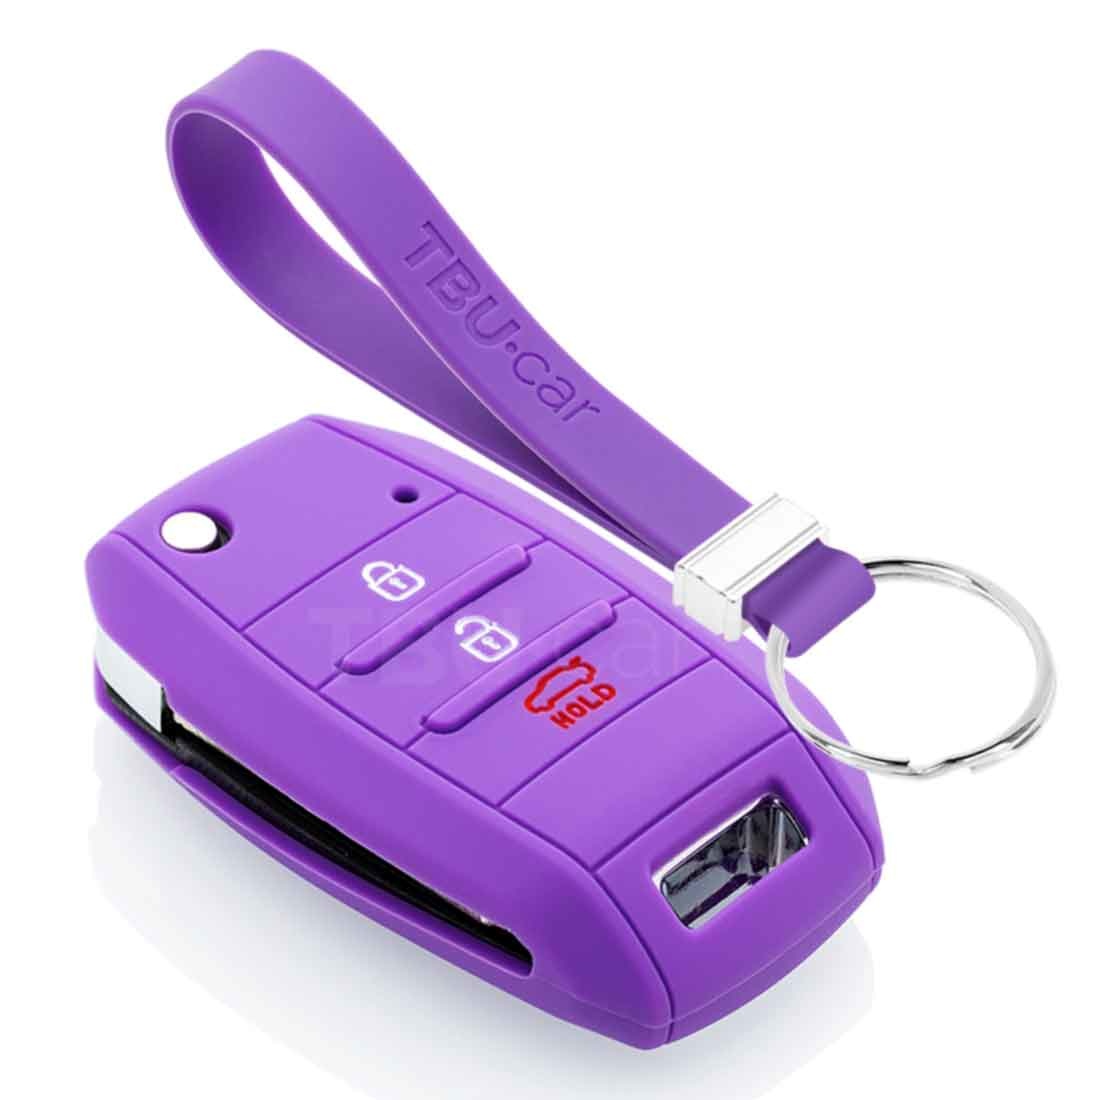 TBU car TBU car Autoschlüssel Hülle kompatibel mit Hyundai 3 Tasten - Schutzhülle aus Silikon - Auto Schlüsselhülle Cover in Violett